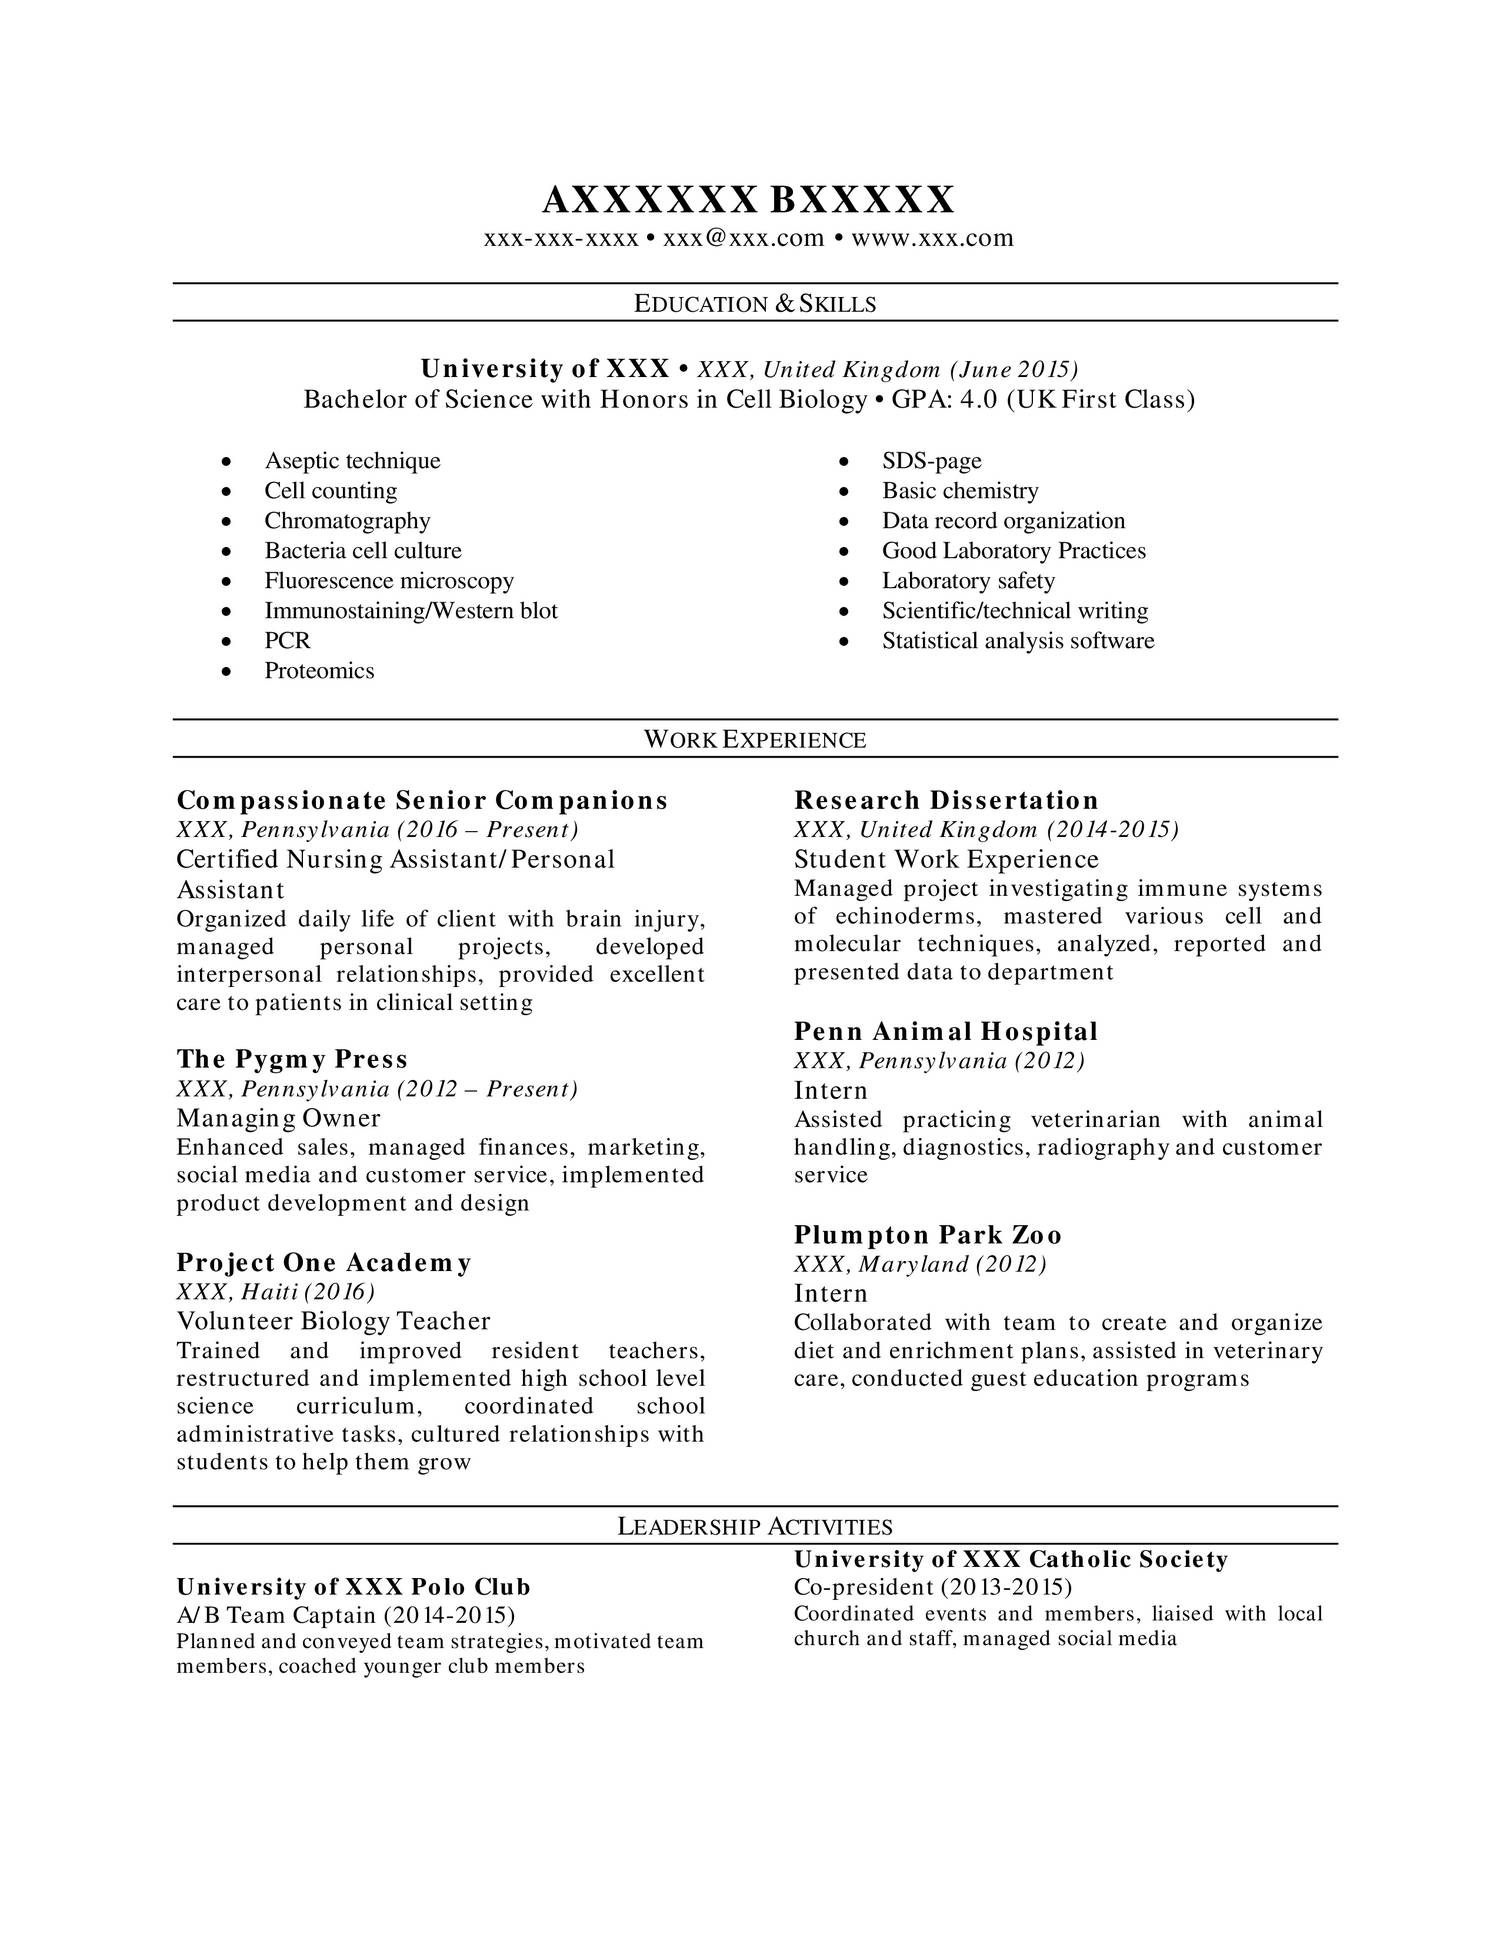 reddit best resume writing service